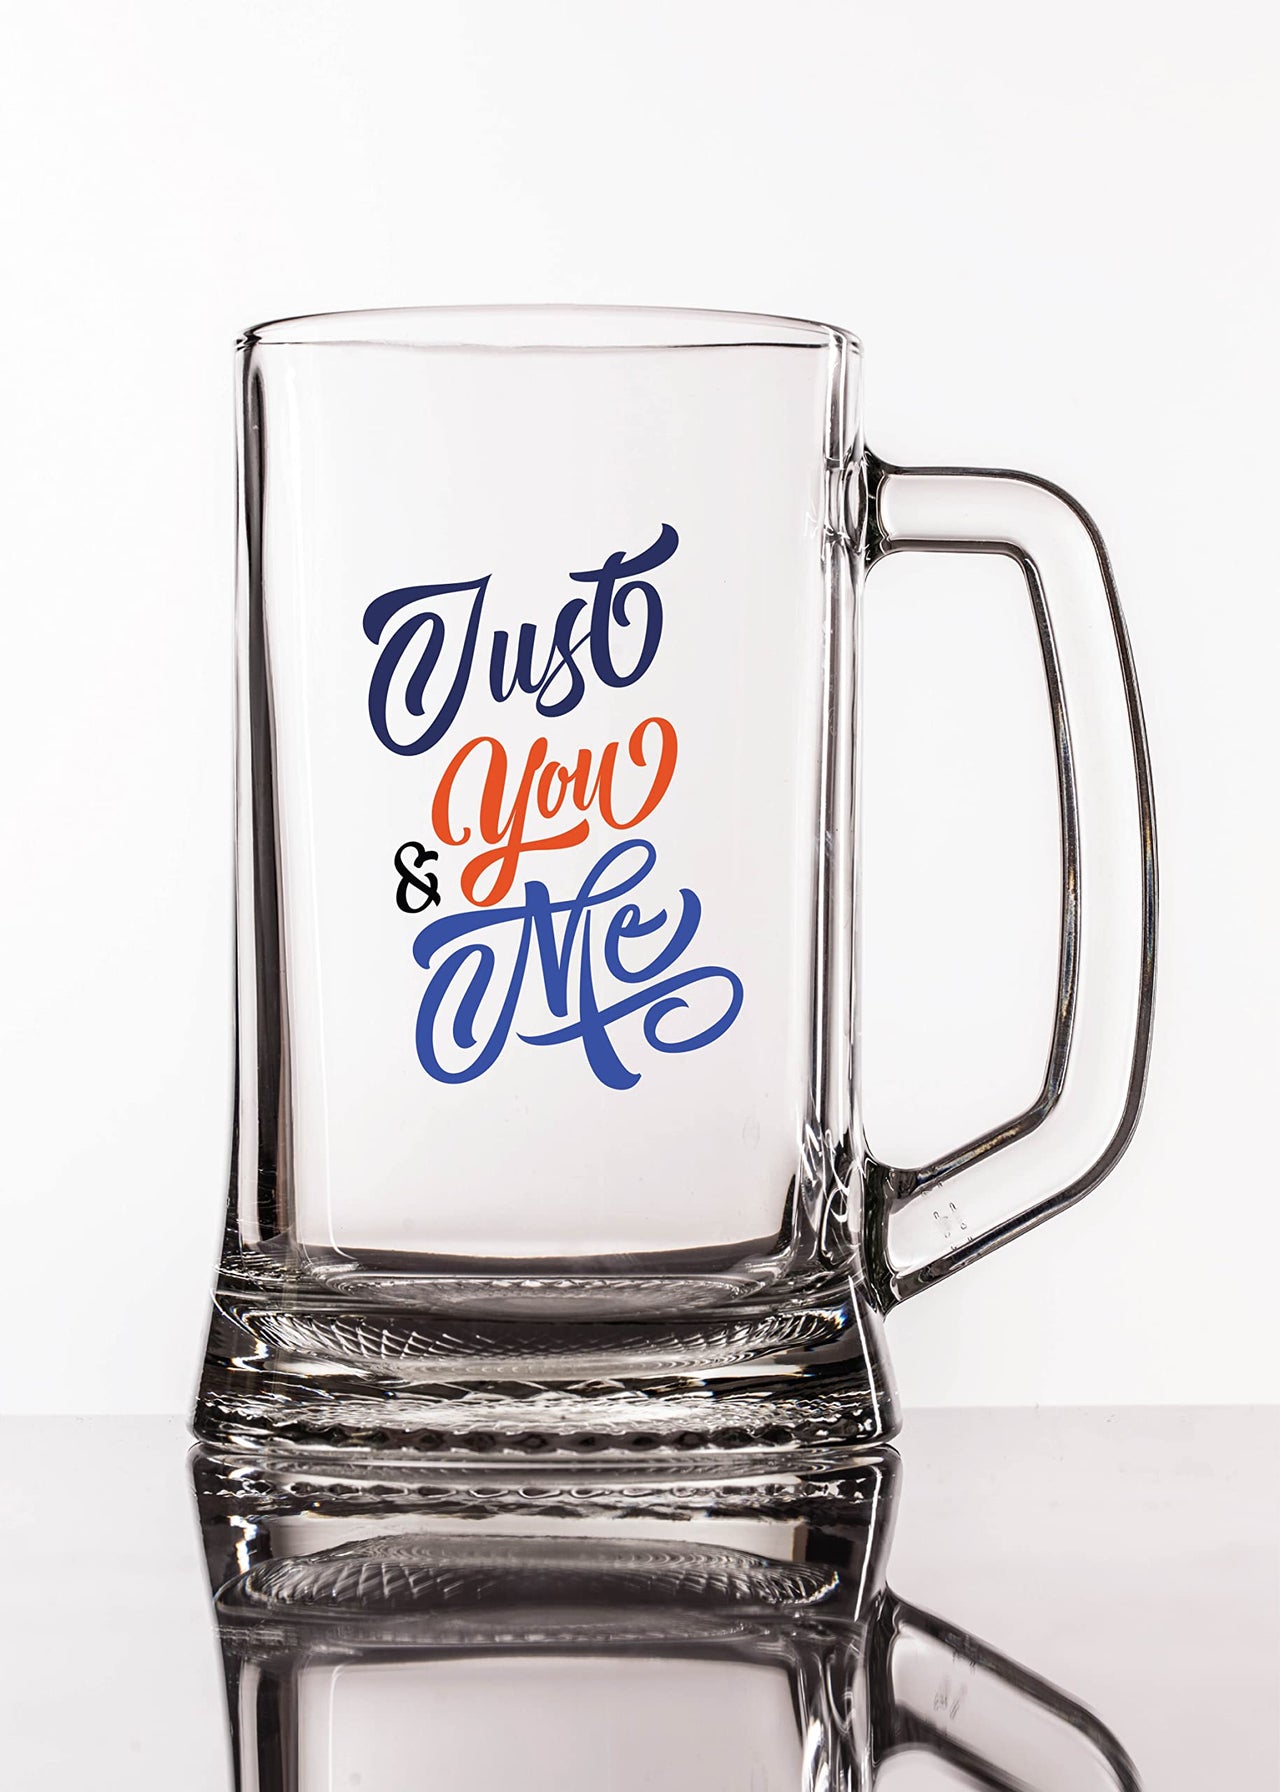 Just You & Me,Beer Mug 1 Piece Clear, 500 ml - Transparent Glass Beer Mug